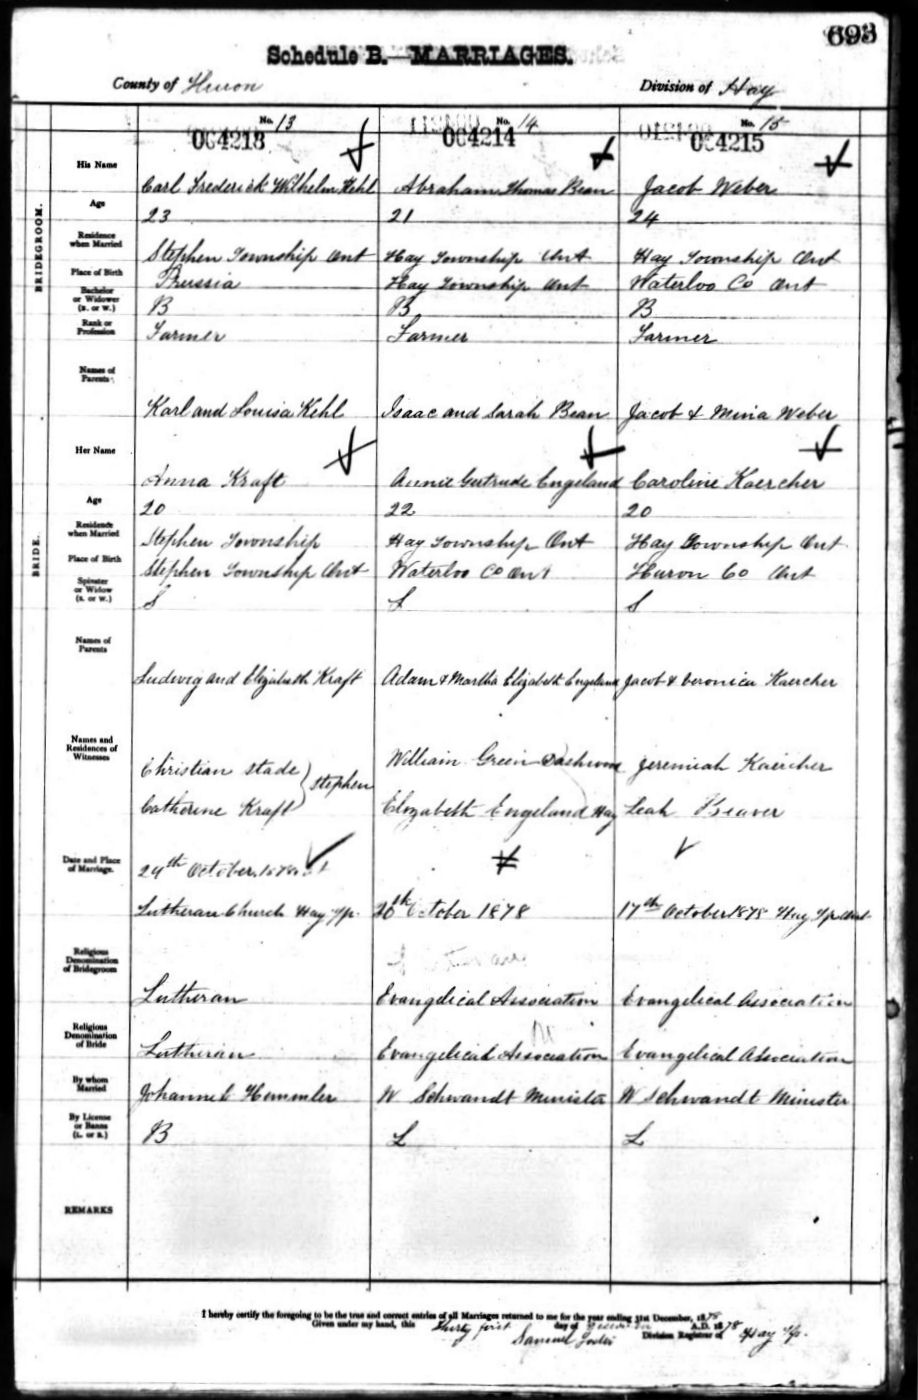 Marriage record of Jacob Weber and Carolina Kaercher